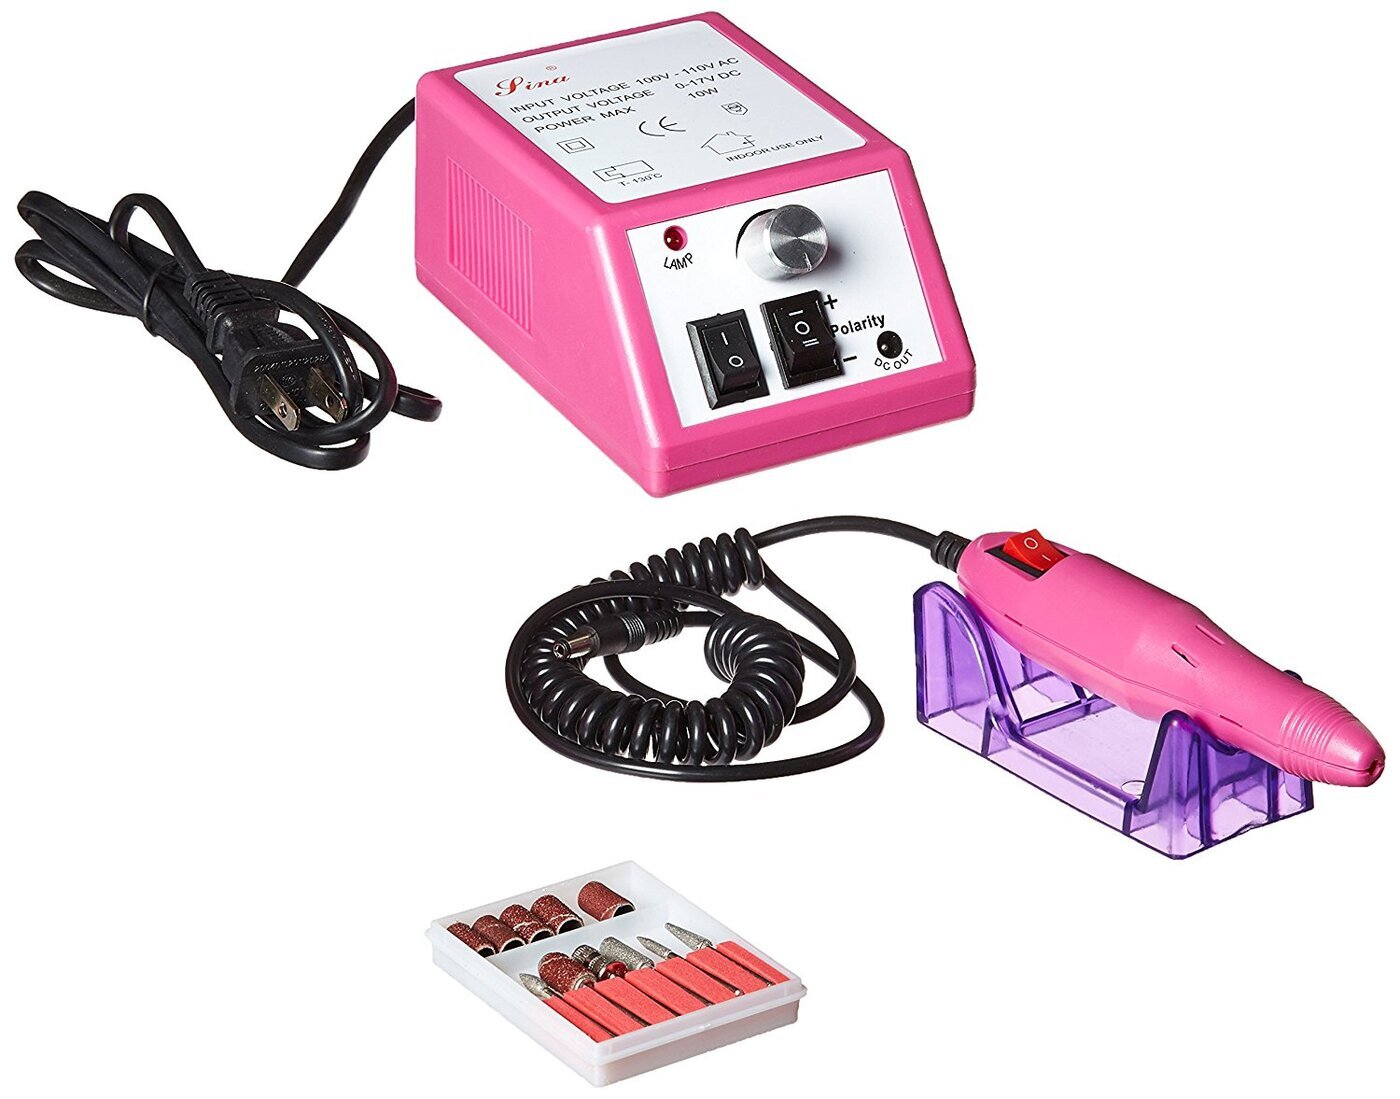 Аппарат для маникюра и педикюра Merc2000-1 аппарат для маникюра и педикюра 65w розовый 35000 оборотов